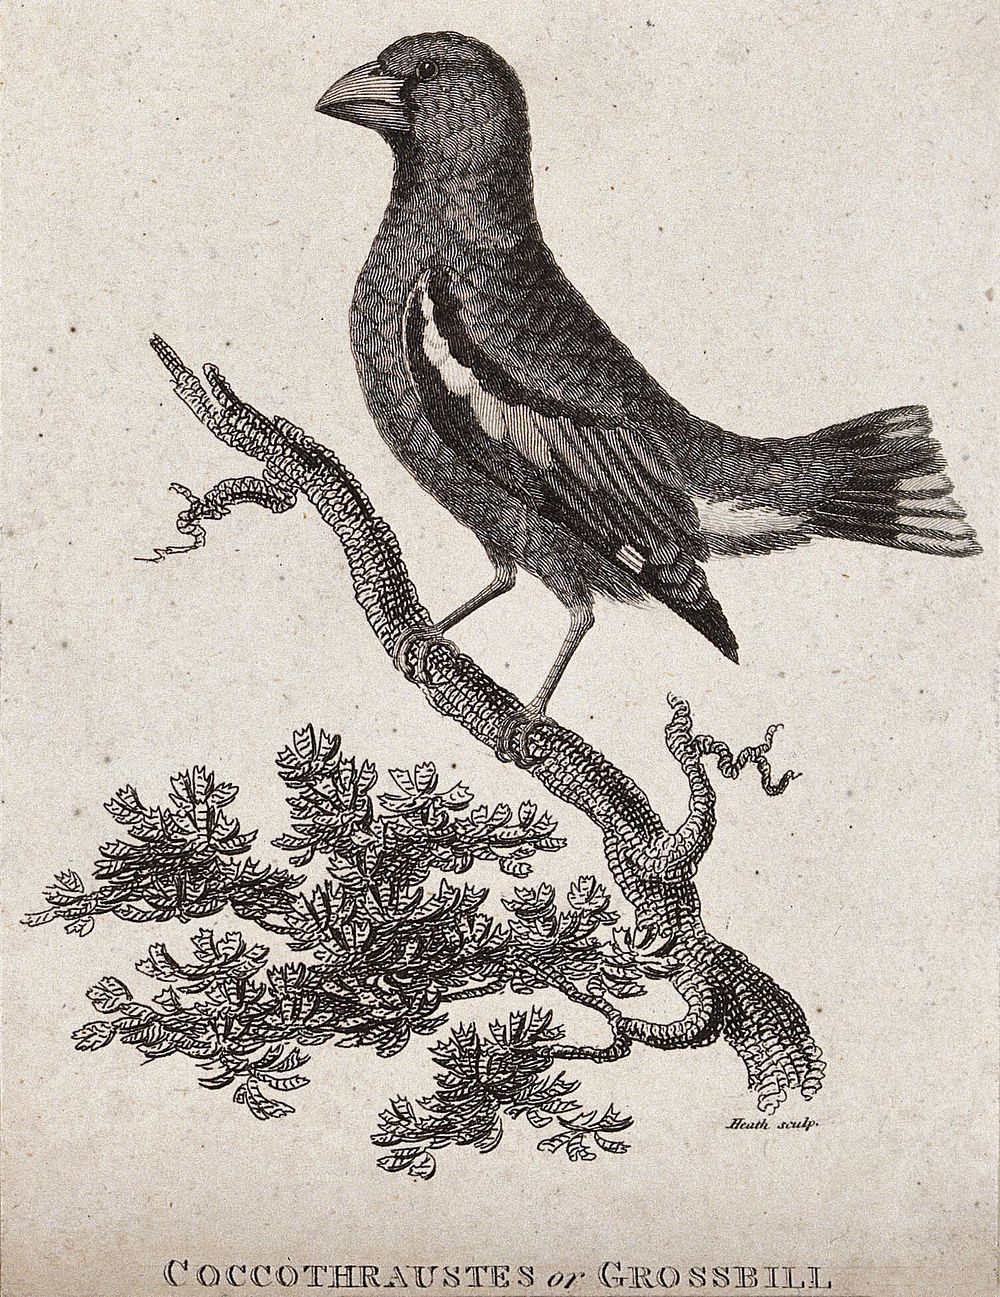 A grossbill (grosbeak) sitting on a branch of a tree. Etching by Heath.